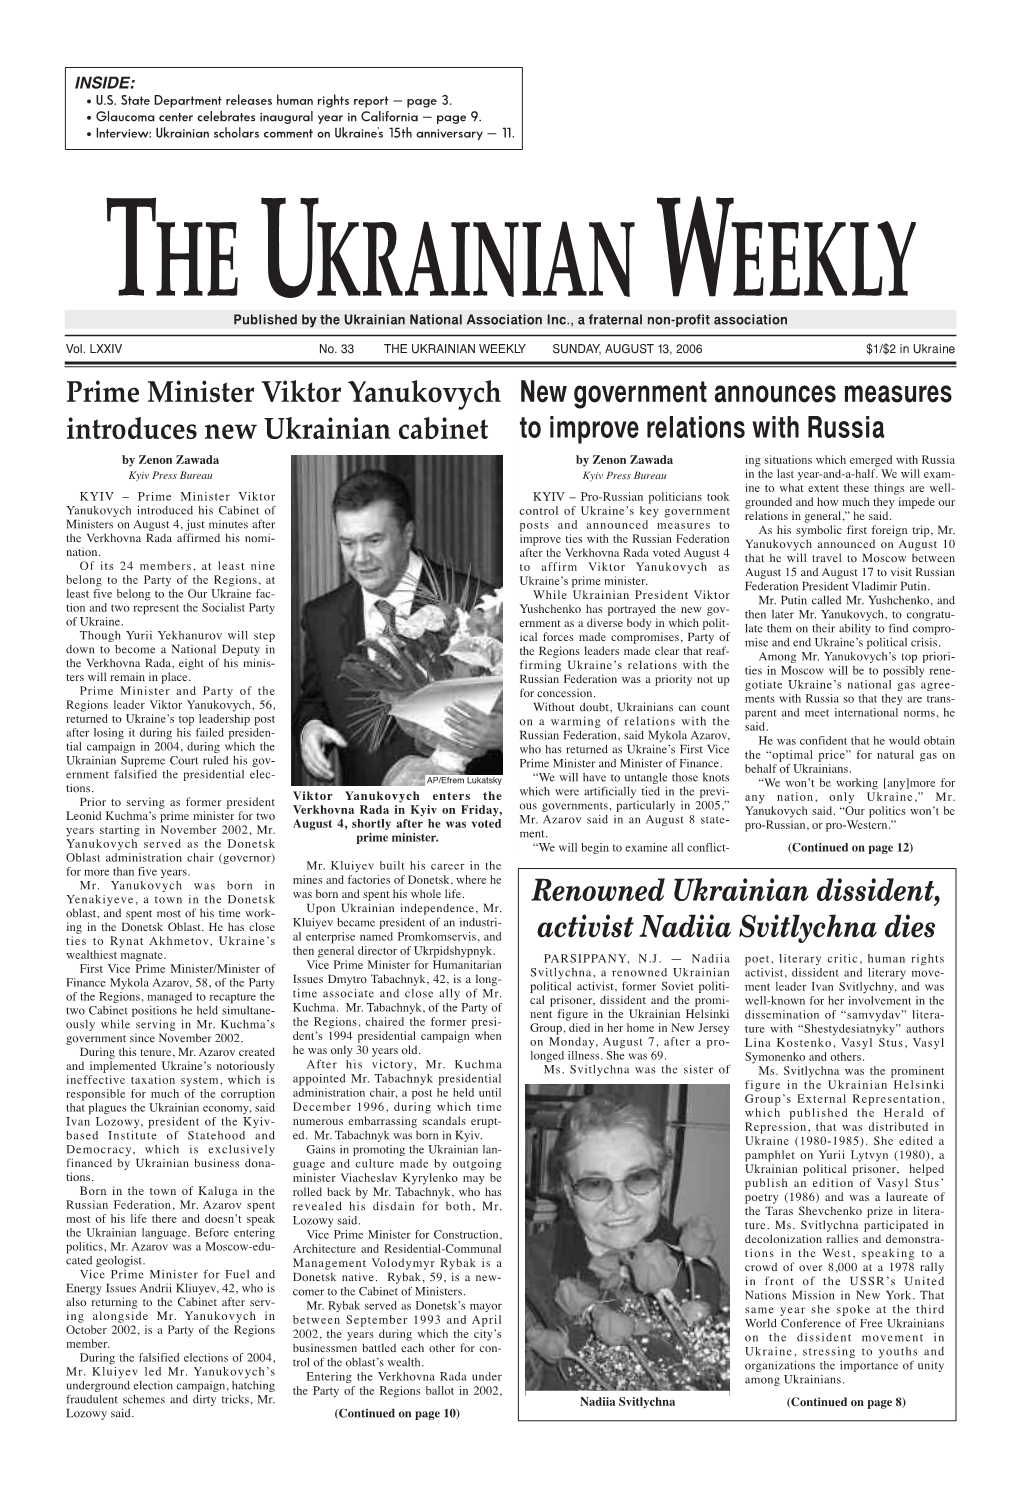 The Ukrainian Weekly 2006, No.33